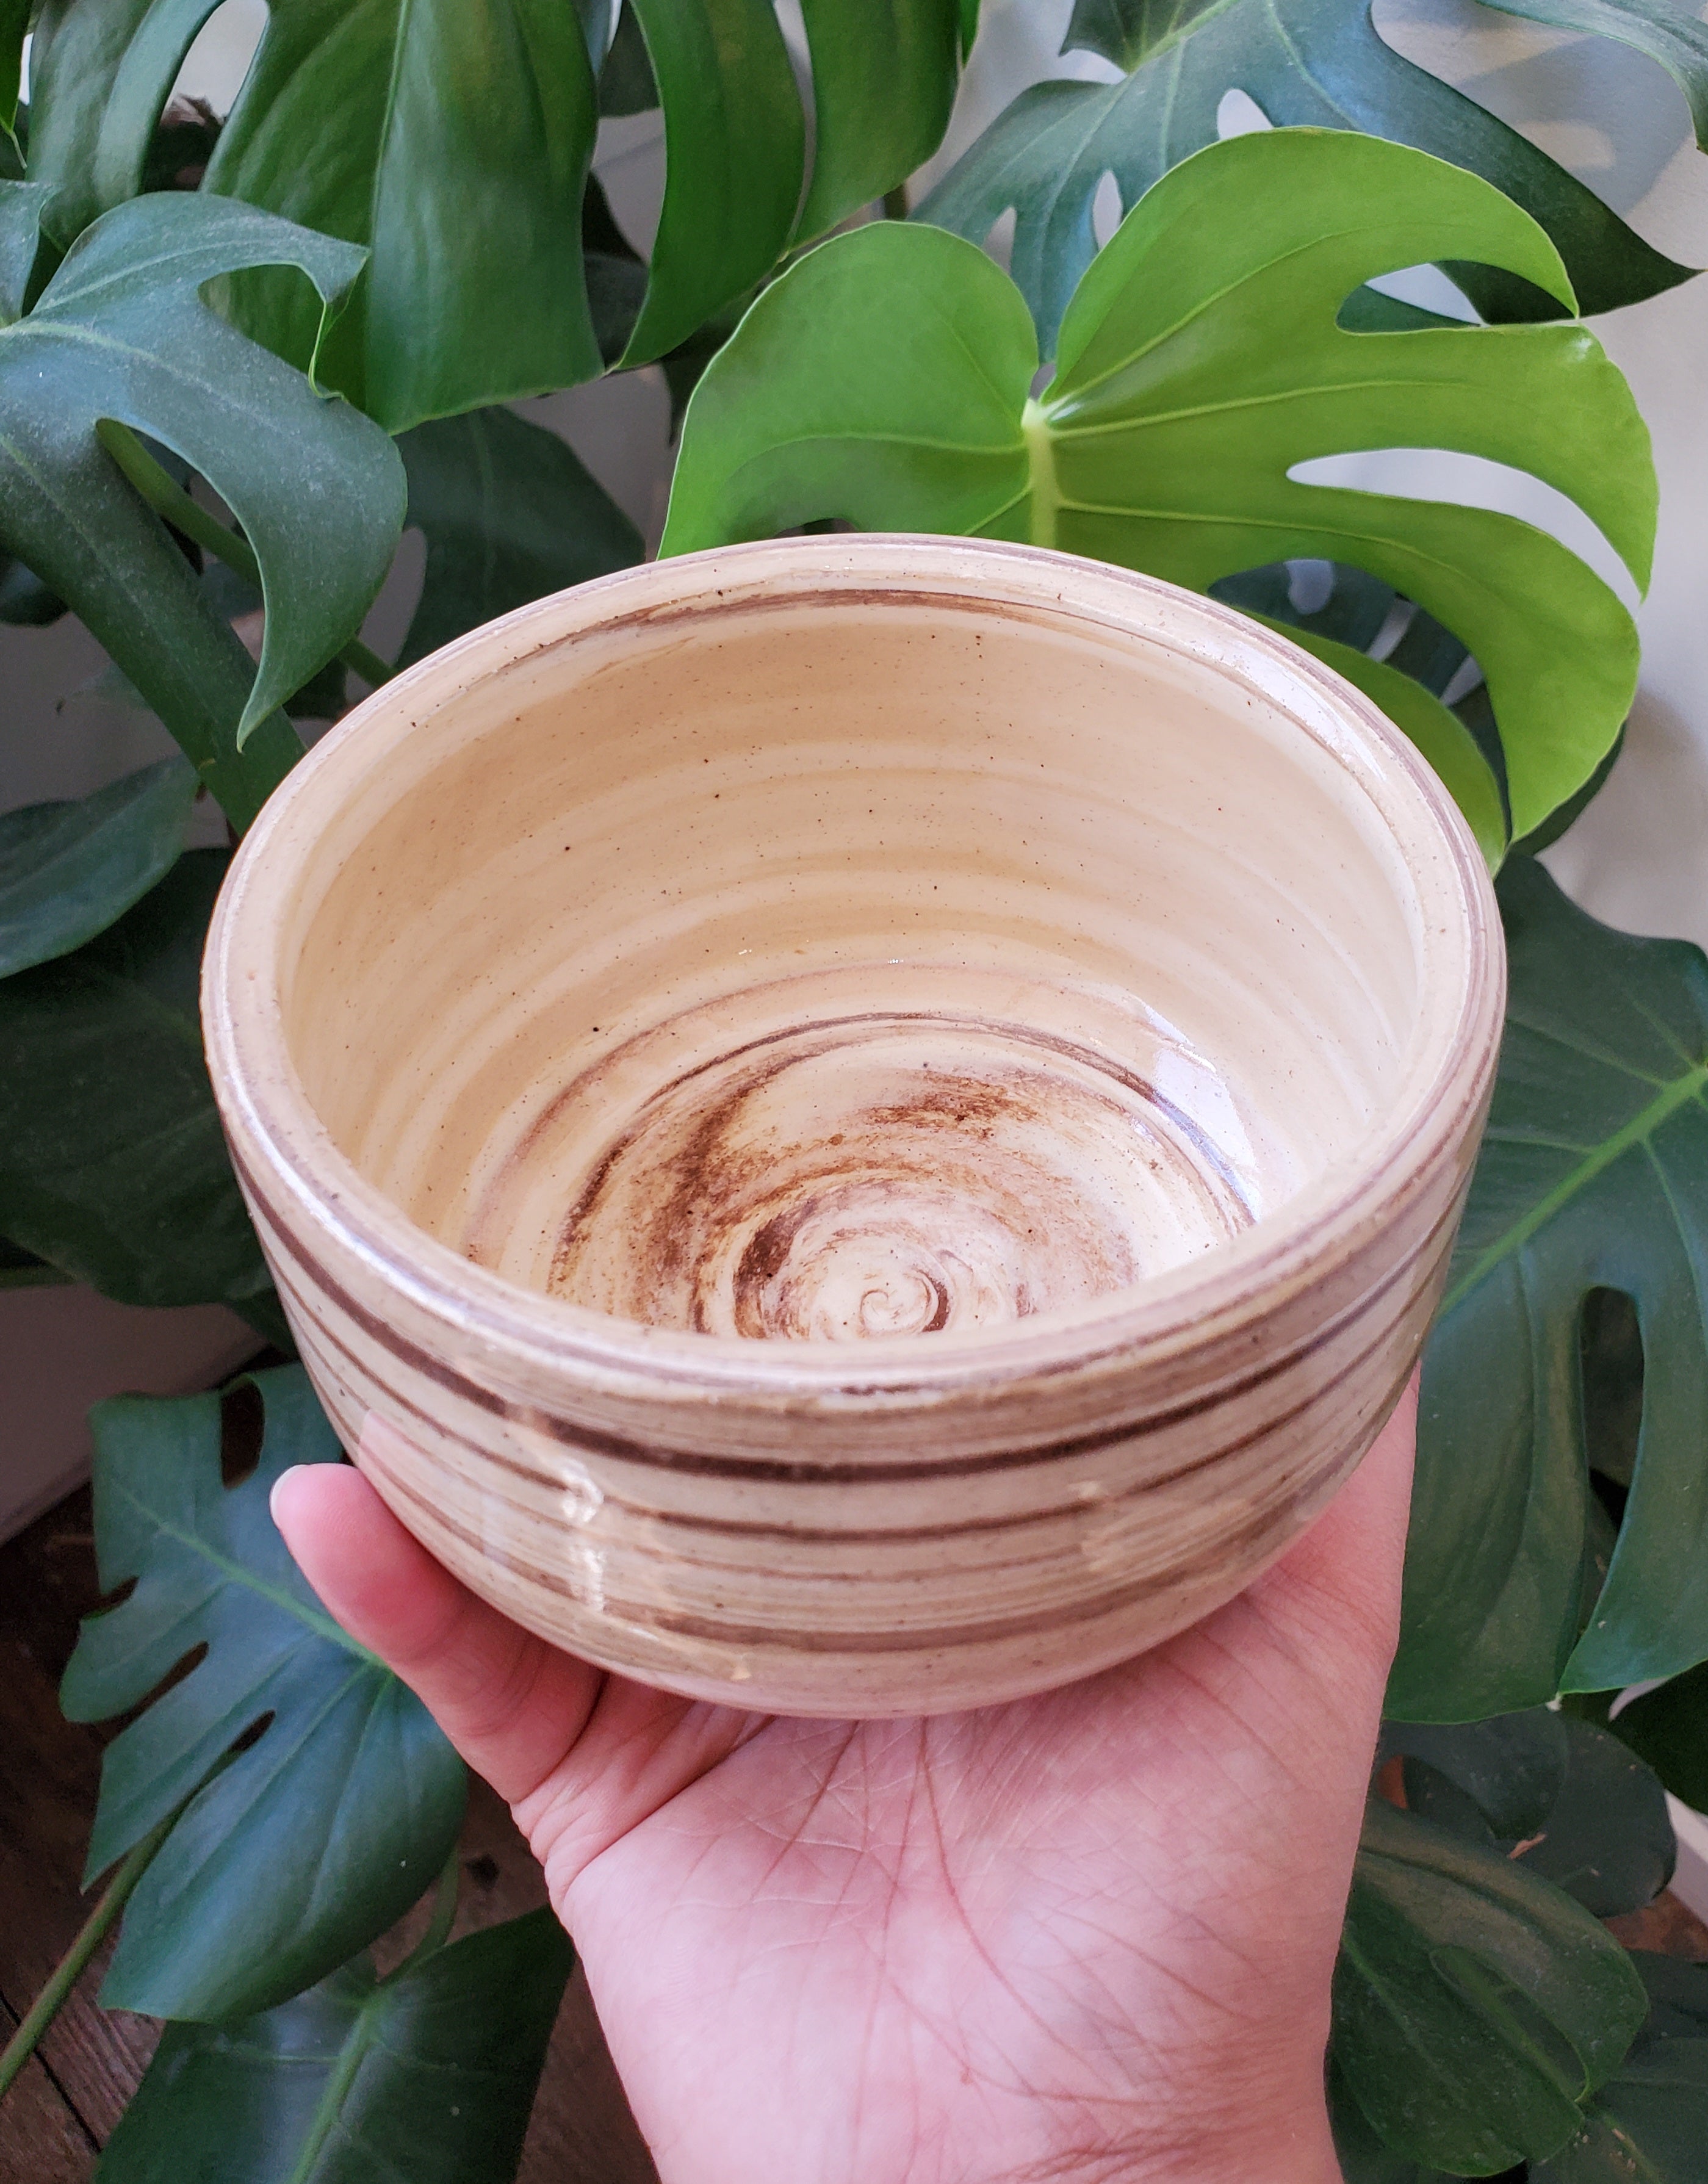 Earth Toned Bowls